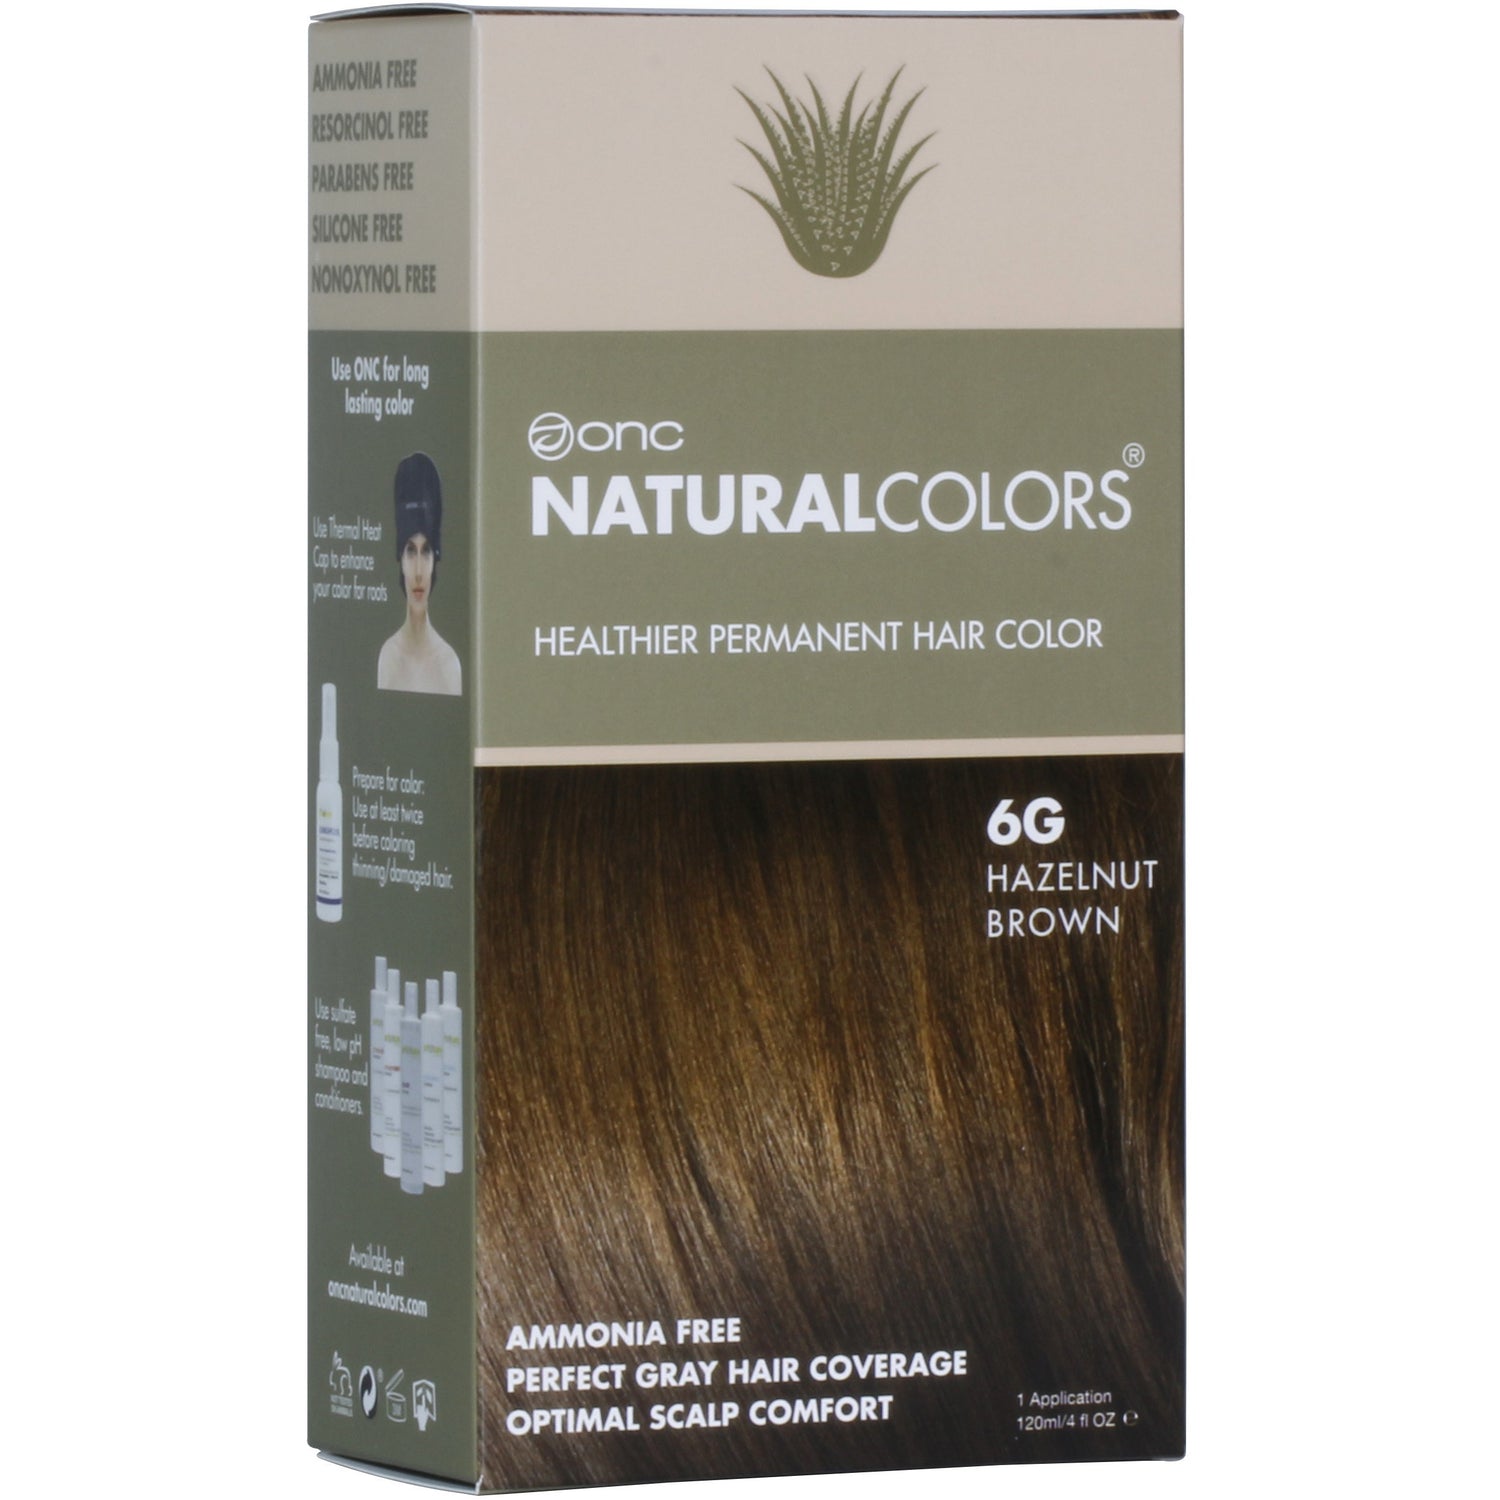 ONC NATURALCOLORS 6G Hazelnut Brown Hair Dye